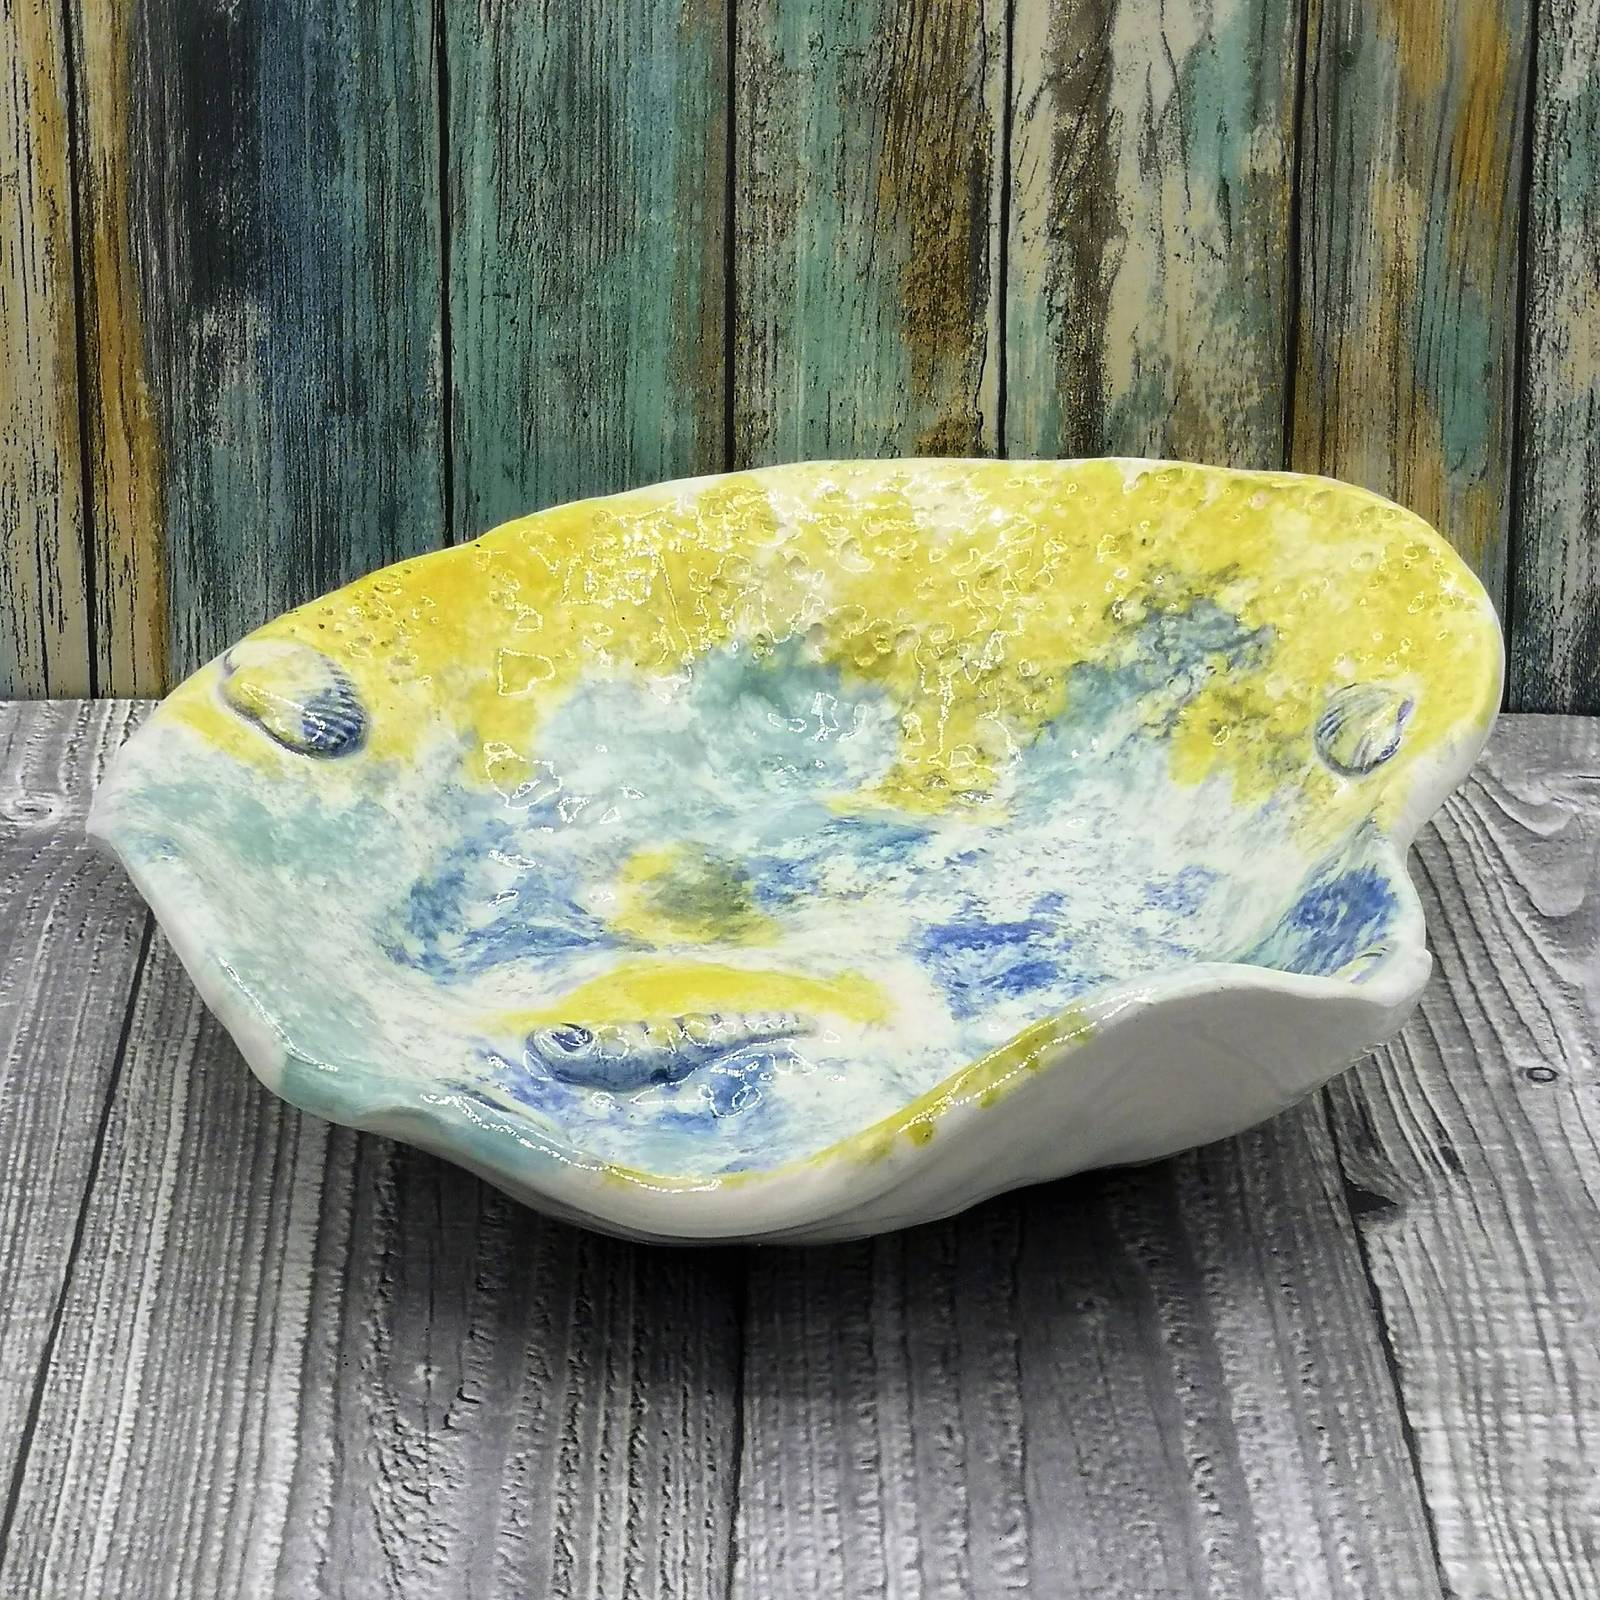 Primary image for Artisan Large Fruit Bowl, Handmade Ceramic Centerpiece Bowl With Seashell Decor